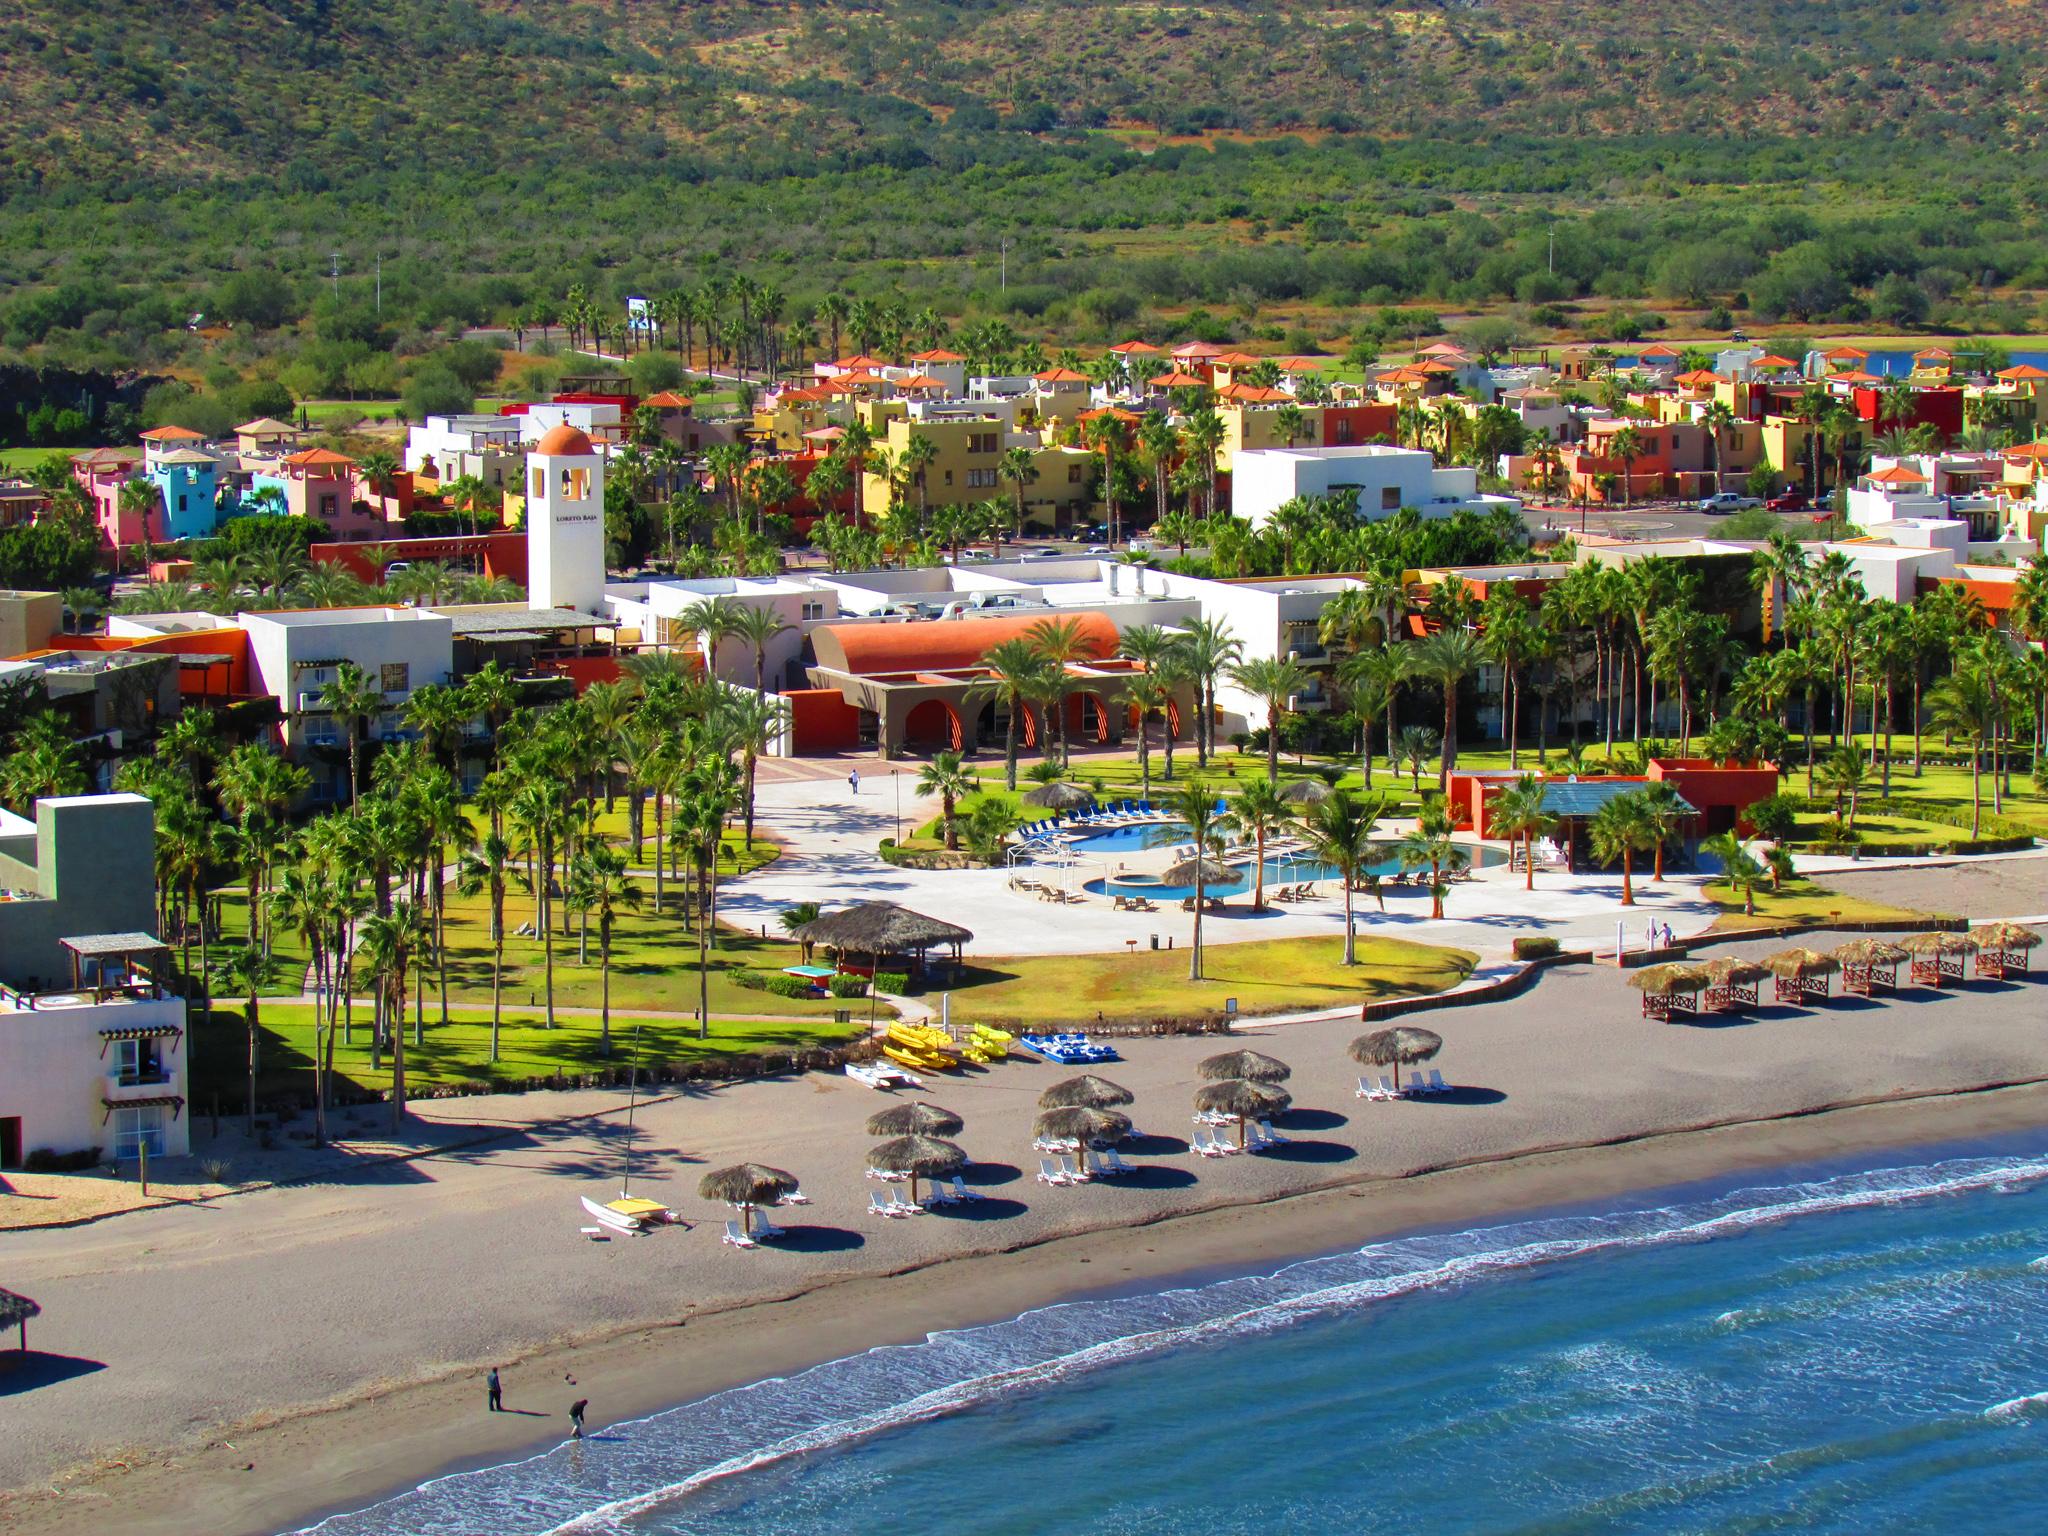 Foto av Playa Nopolo hotellområde